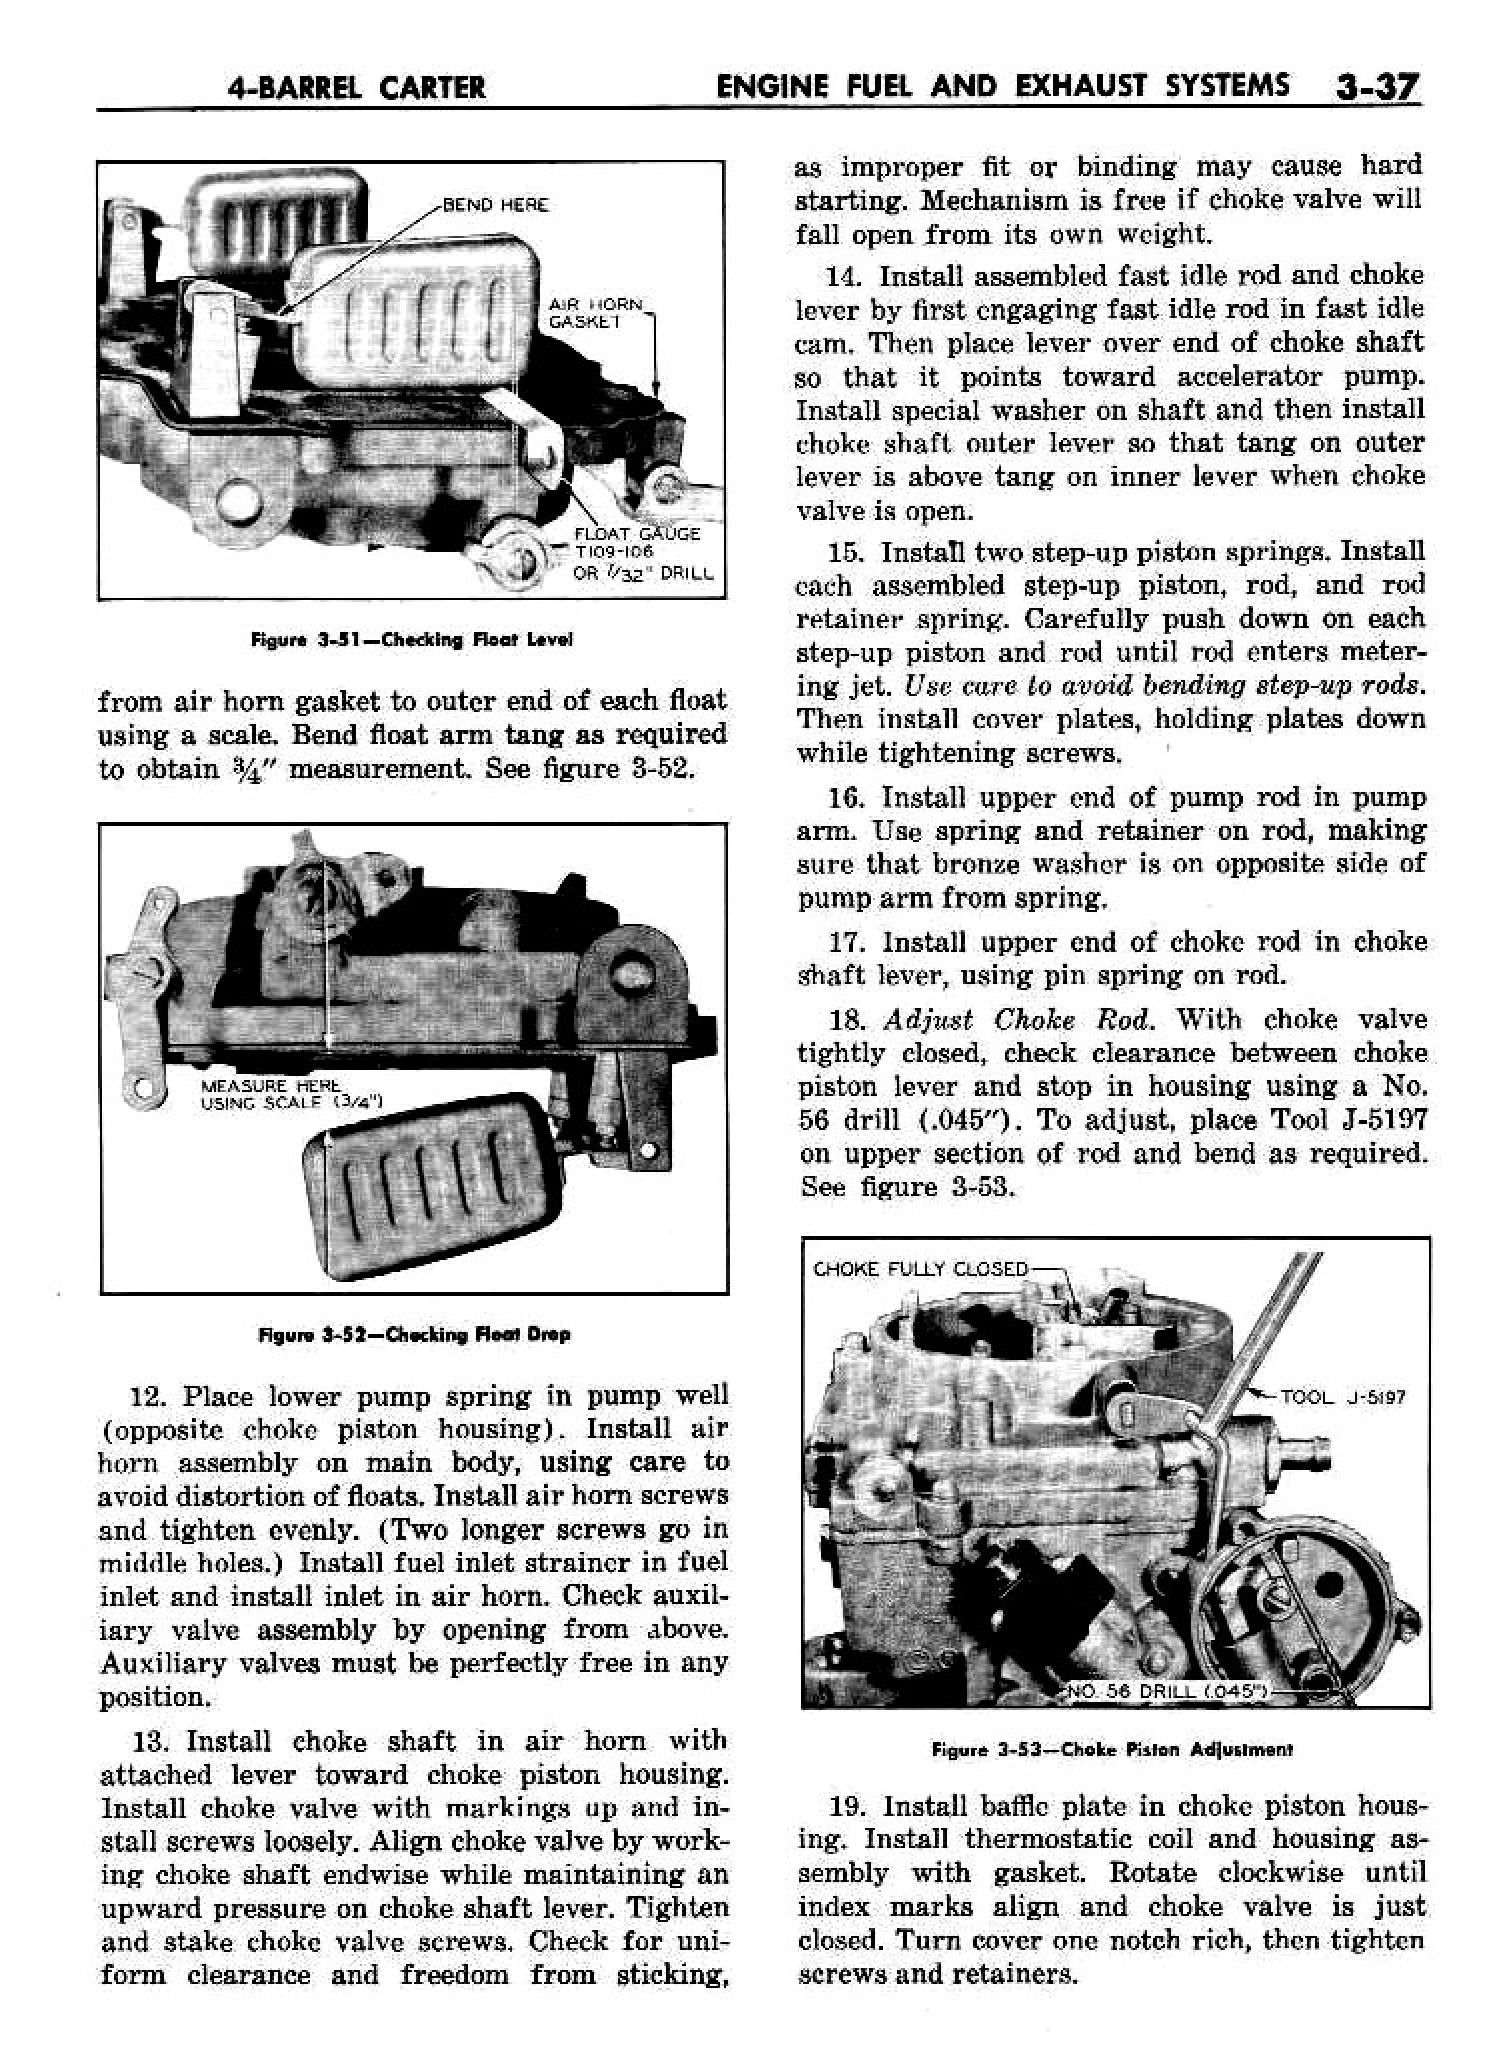 n_04 1958 Buick Shop Manual - Engine Fuel & Exhaust_37.jpg